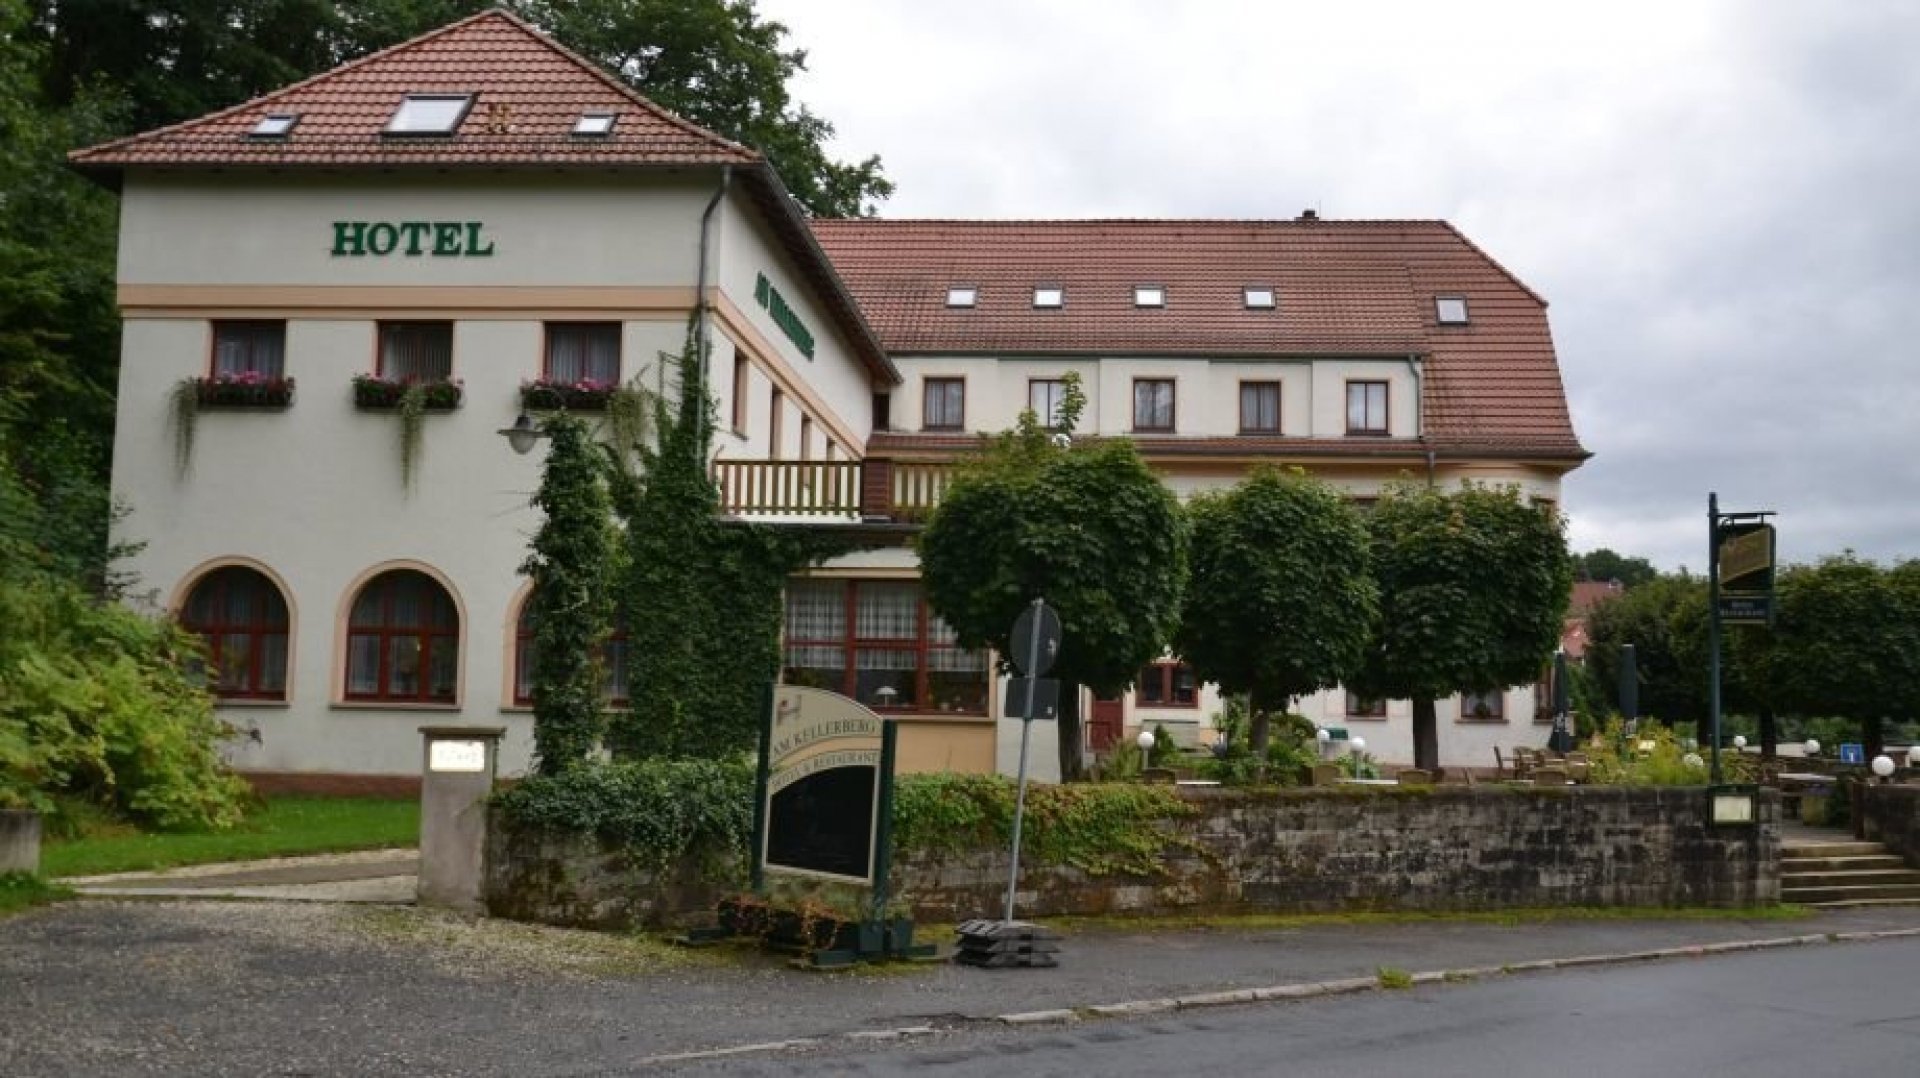 5 zu 4 Angebot – Hotel am Kellerberg